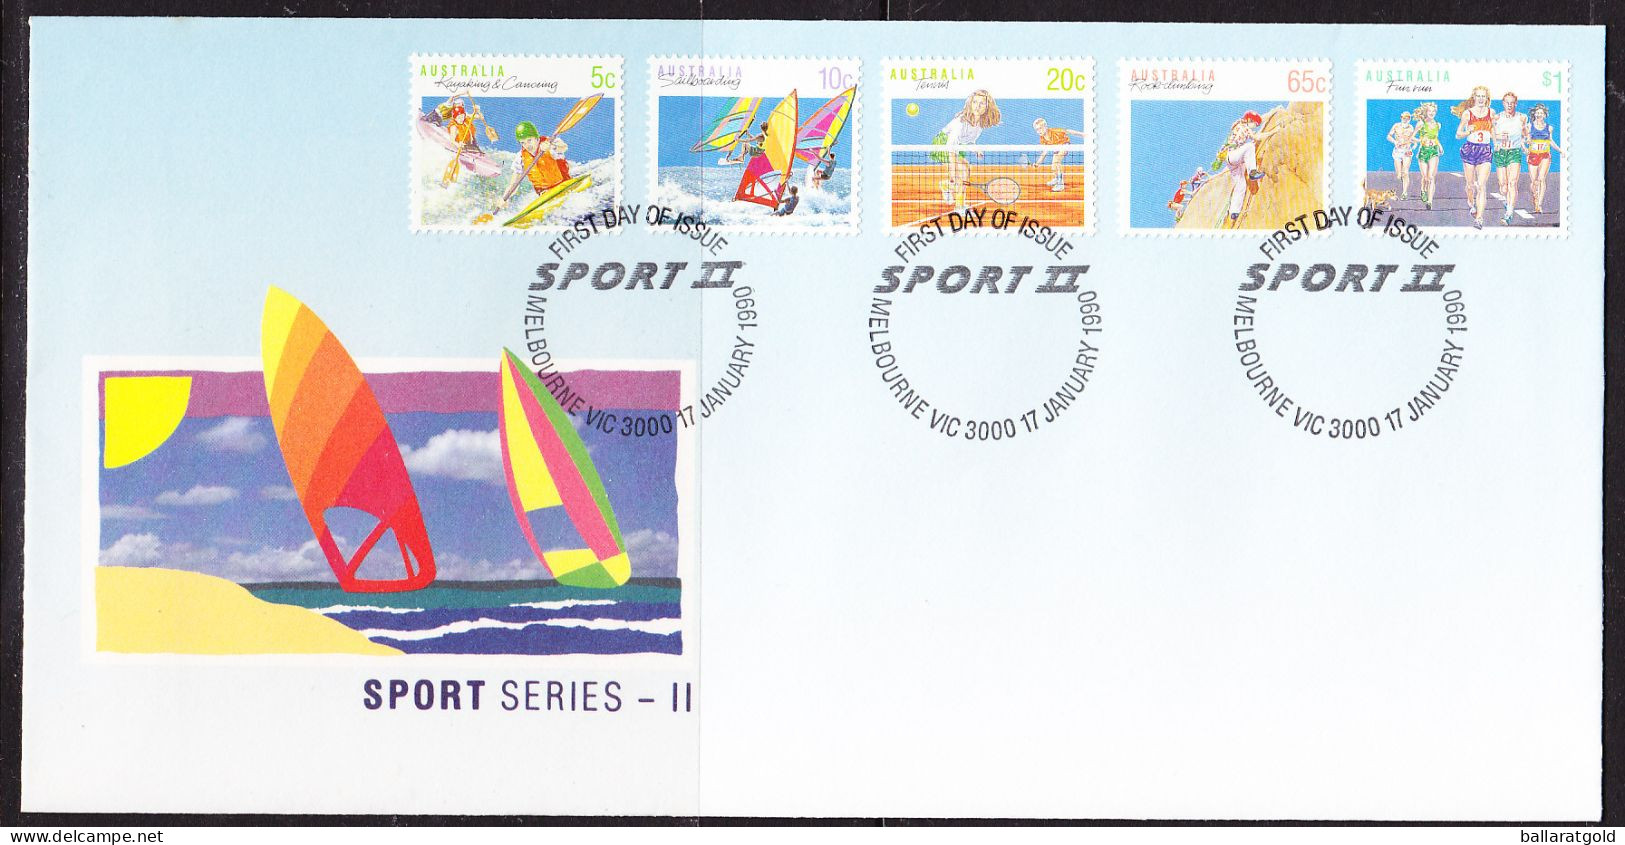 Australia 1990 Sports APM21890 First Day Cover - Storia Postale